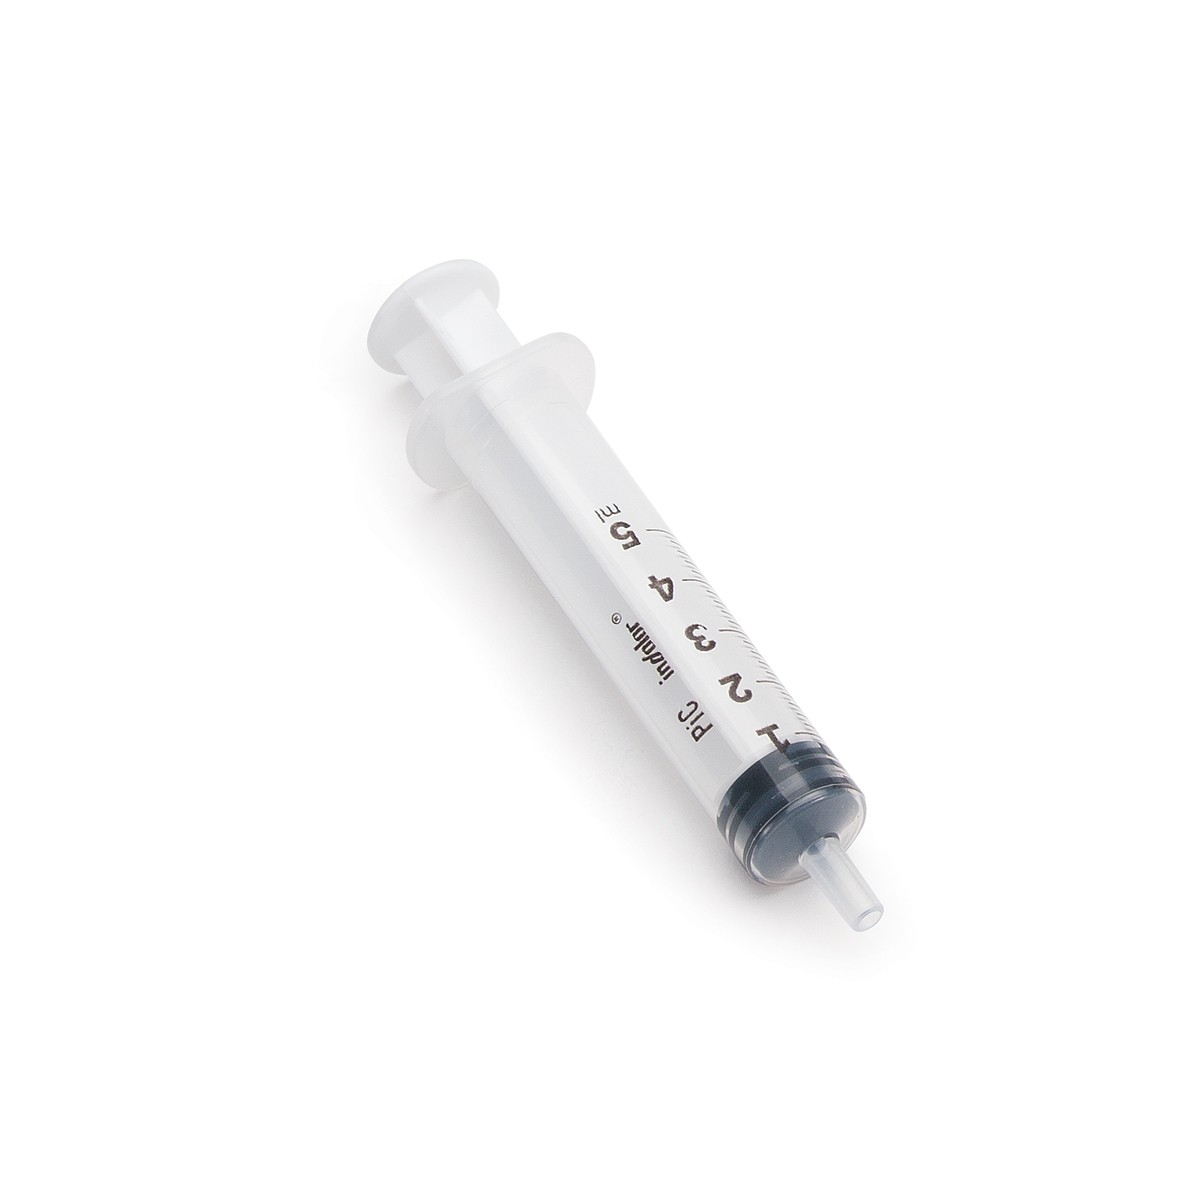 5 mL Syringe for Mini Titrators - HI740236